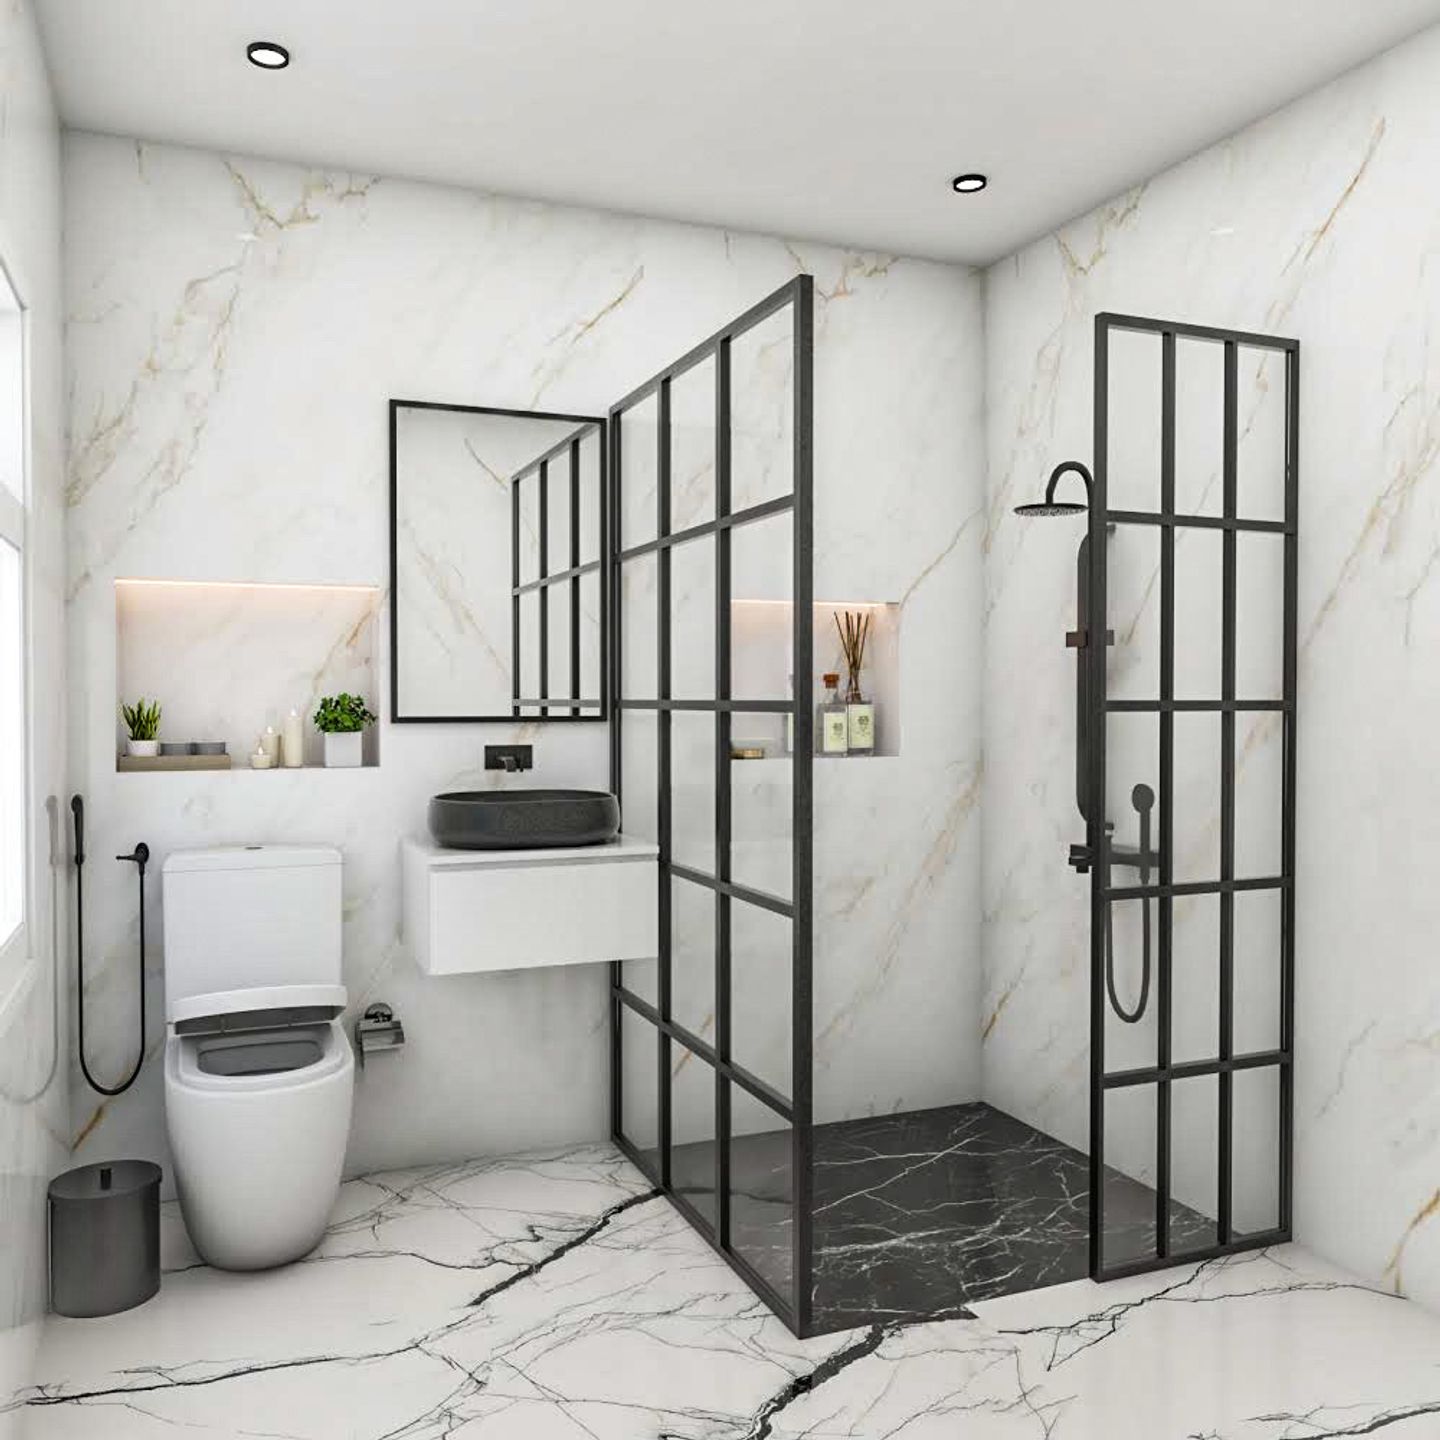 White Small Bathroom Design With Black Grid Partition - Livspace